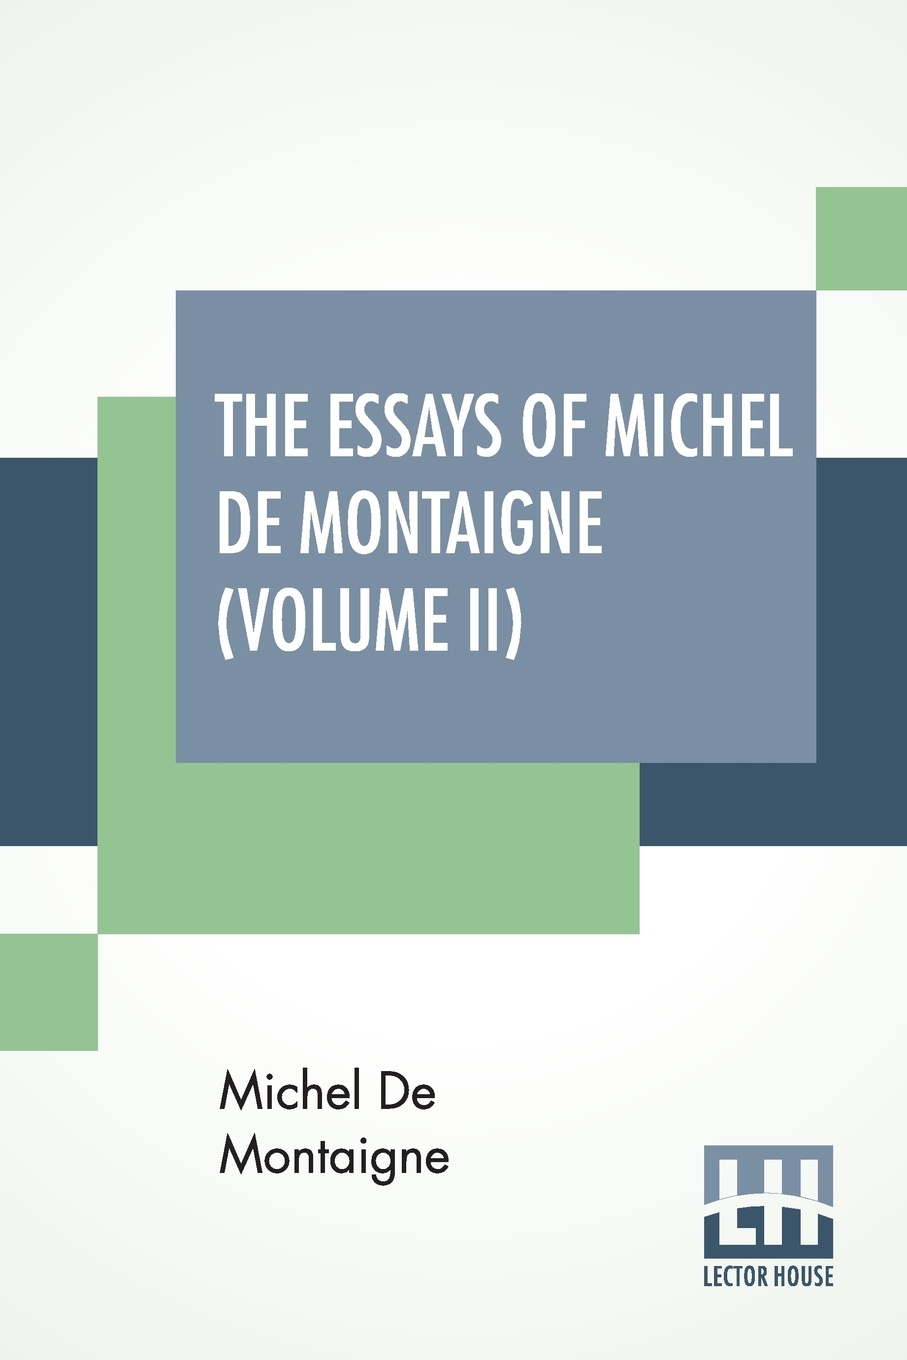 The Essays Of Michel De Montaigne (Volume II). Translated By Charles Cotton. Edited By William Carew Hazlitt.